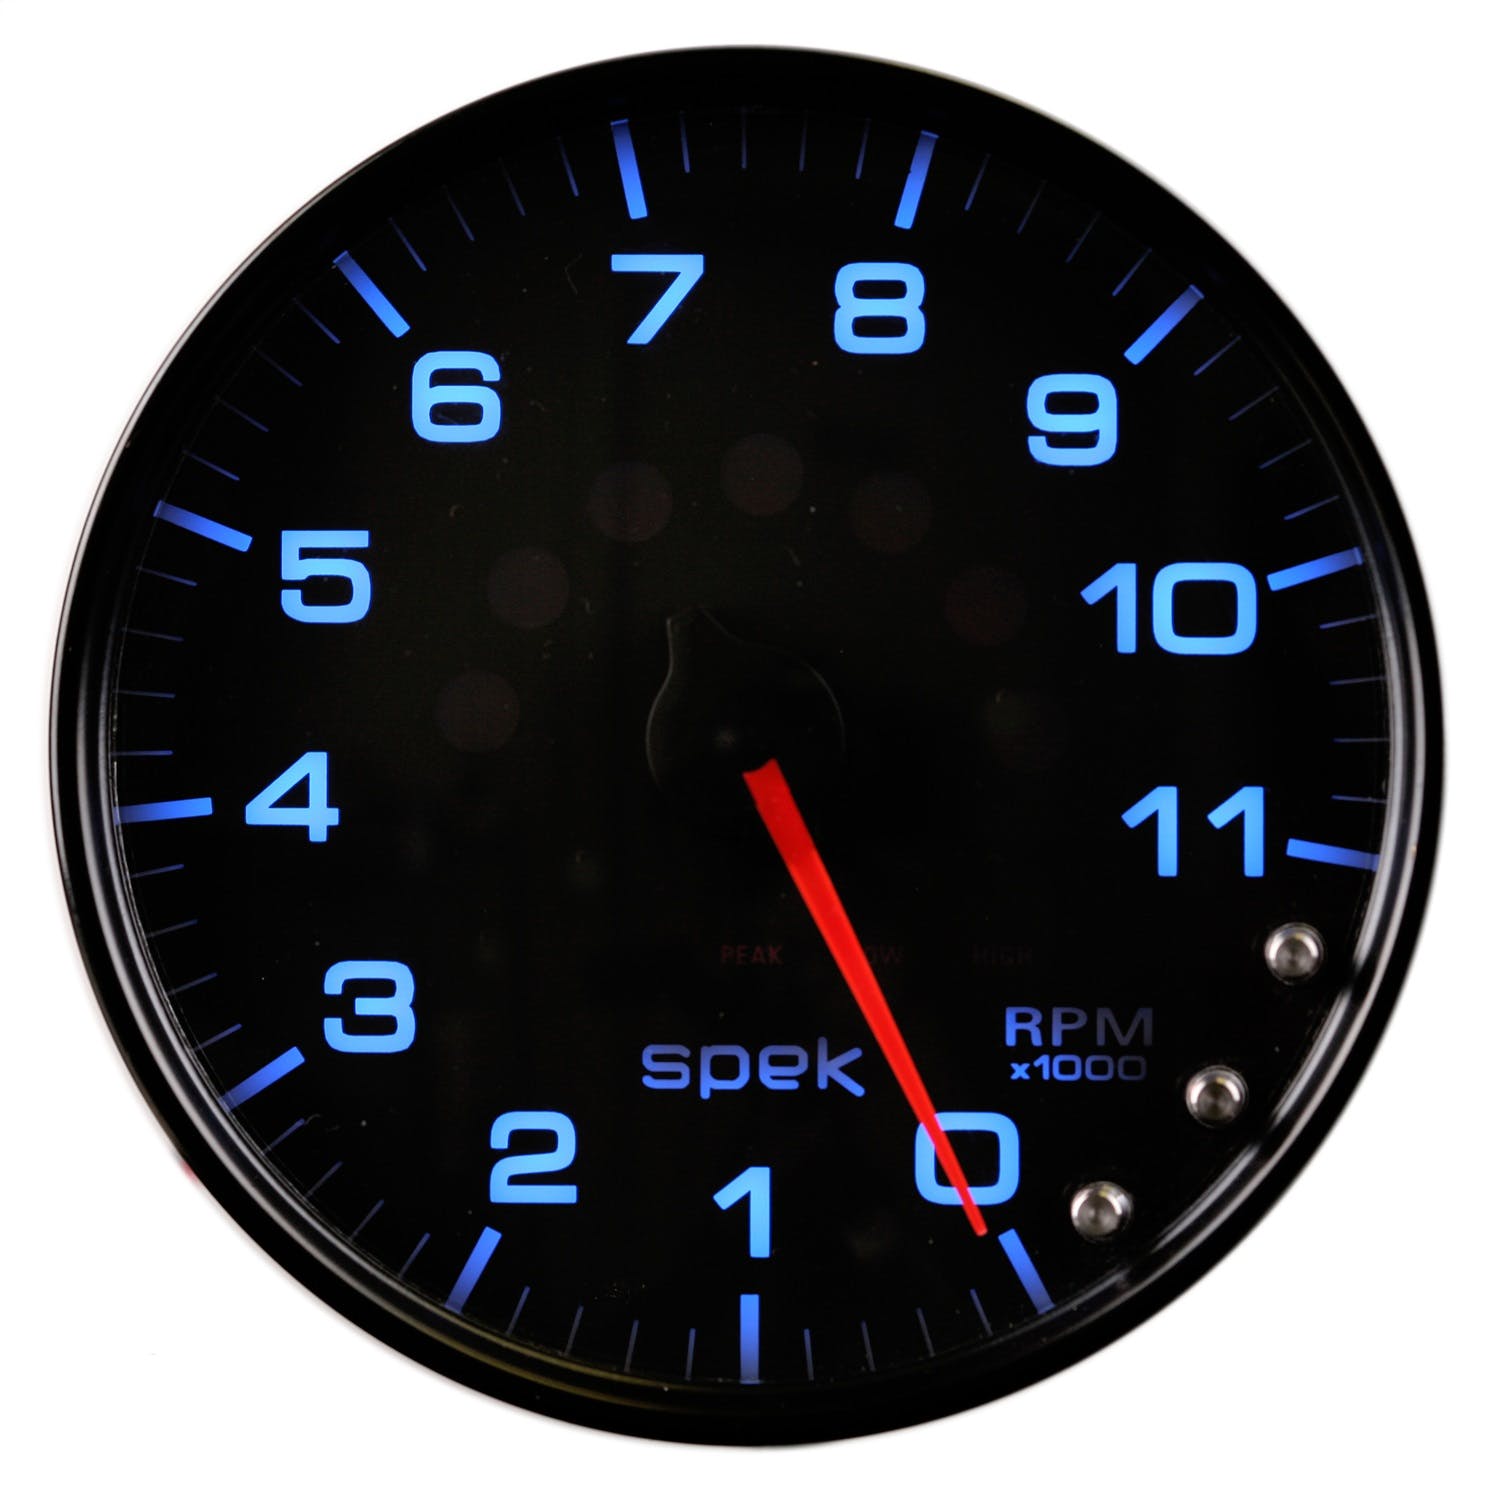 AutoMeter Products P23932 Spek Pro Tachometer Gauge, 5, 11K RPM, with Shift Light Black/Black